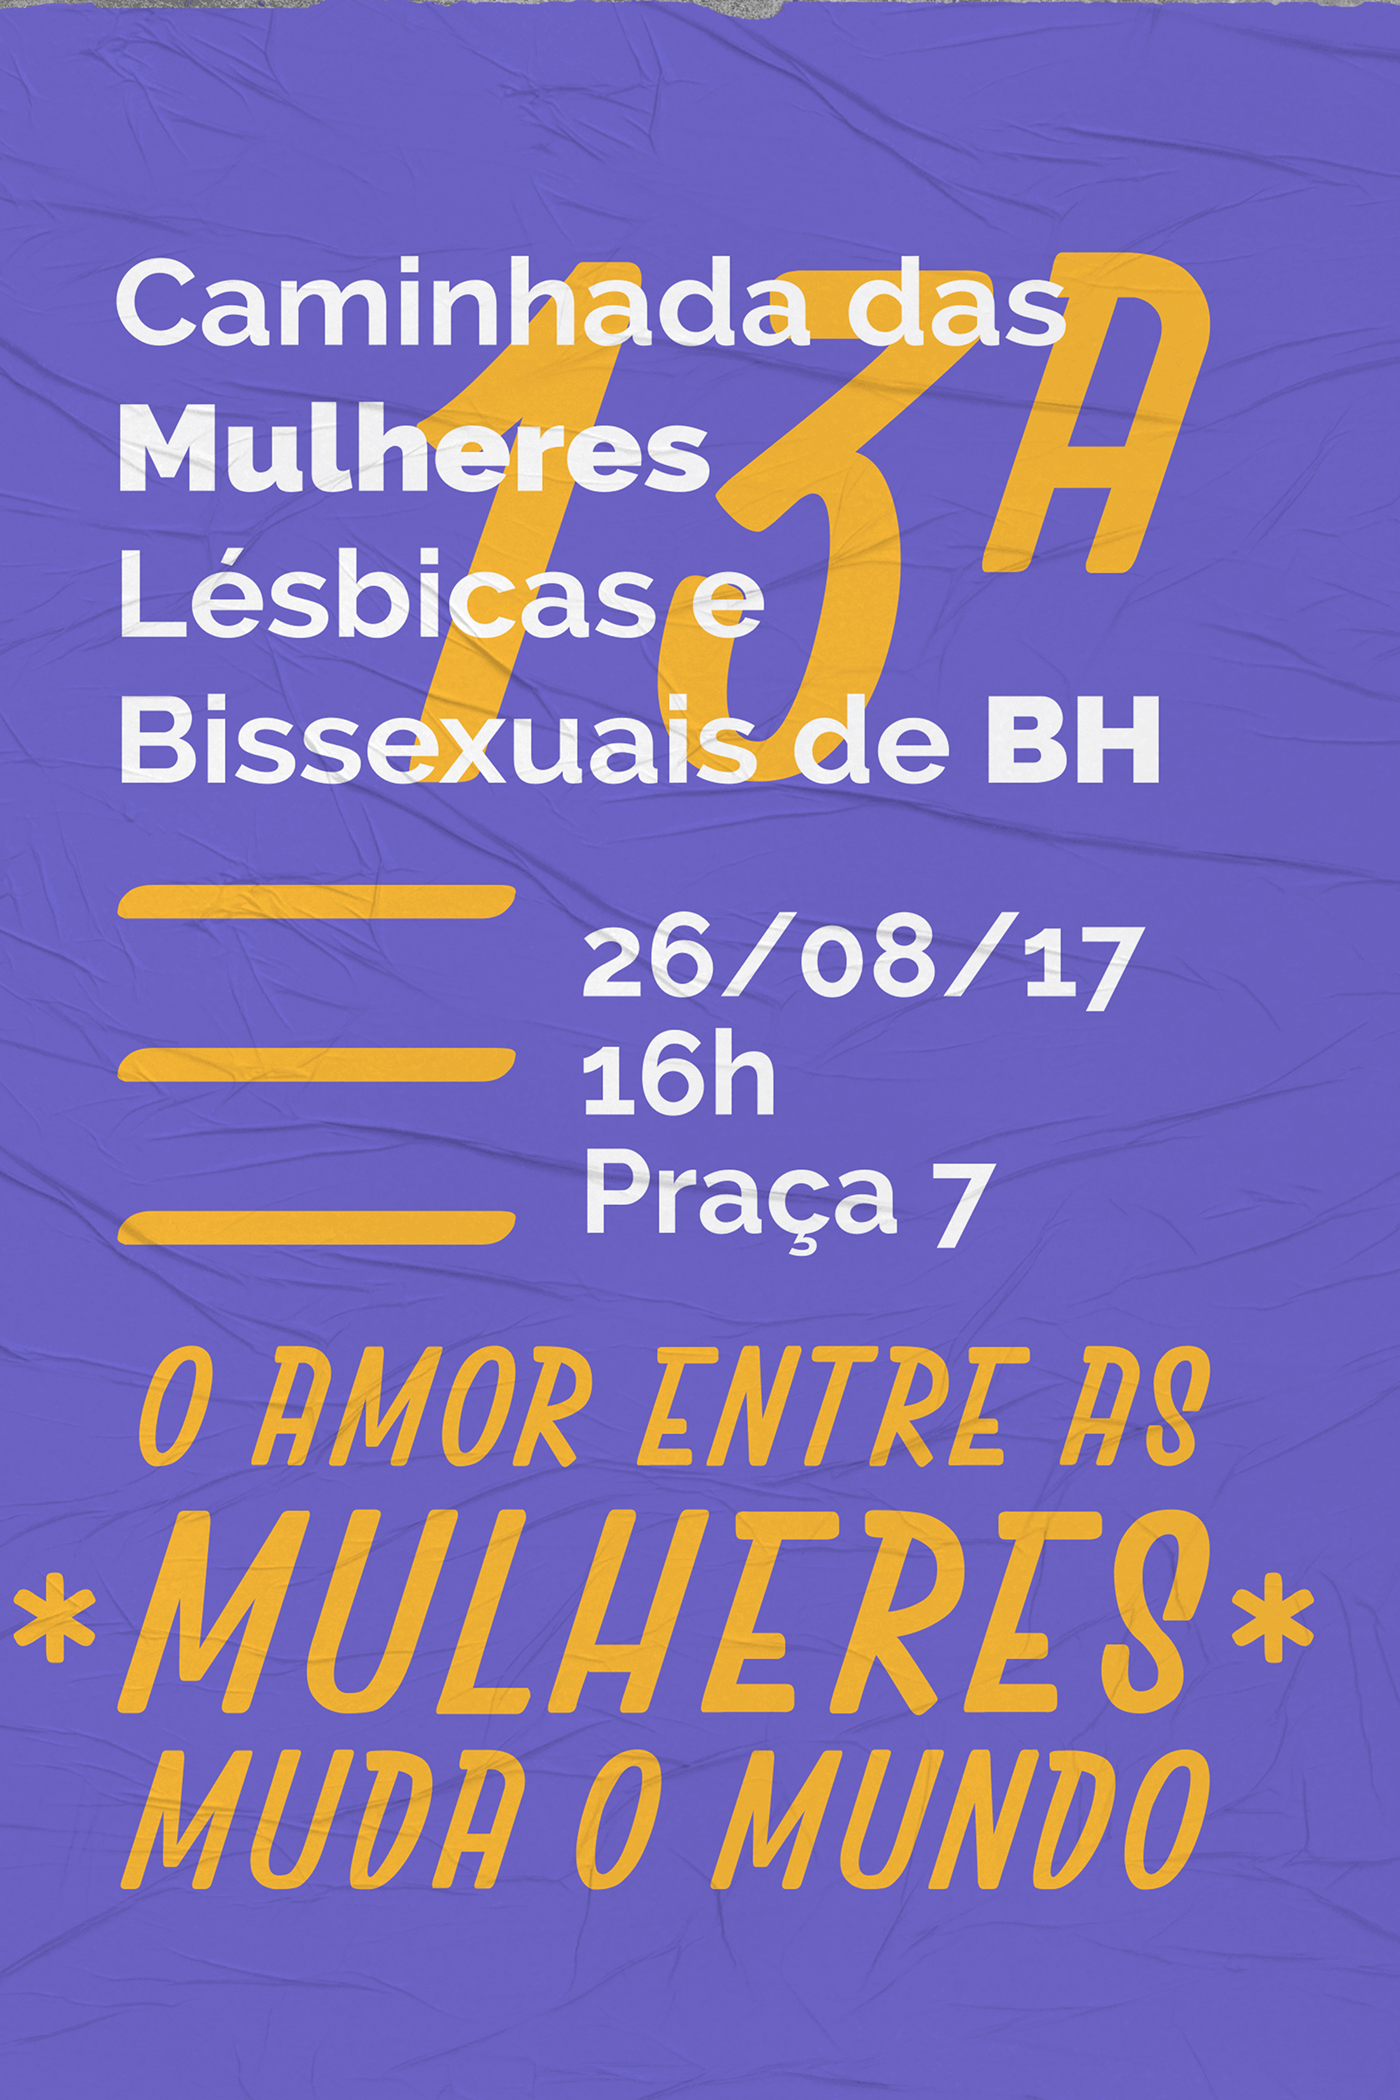 Caminhada lésbicas feminismo Feminista poster militou militancia Bissexuais mulheres mulheres lésbicas